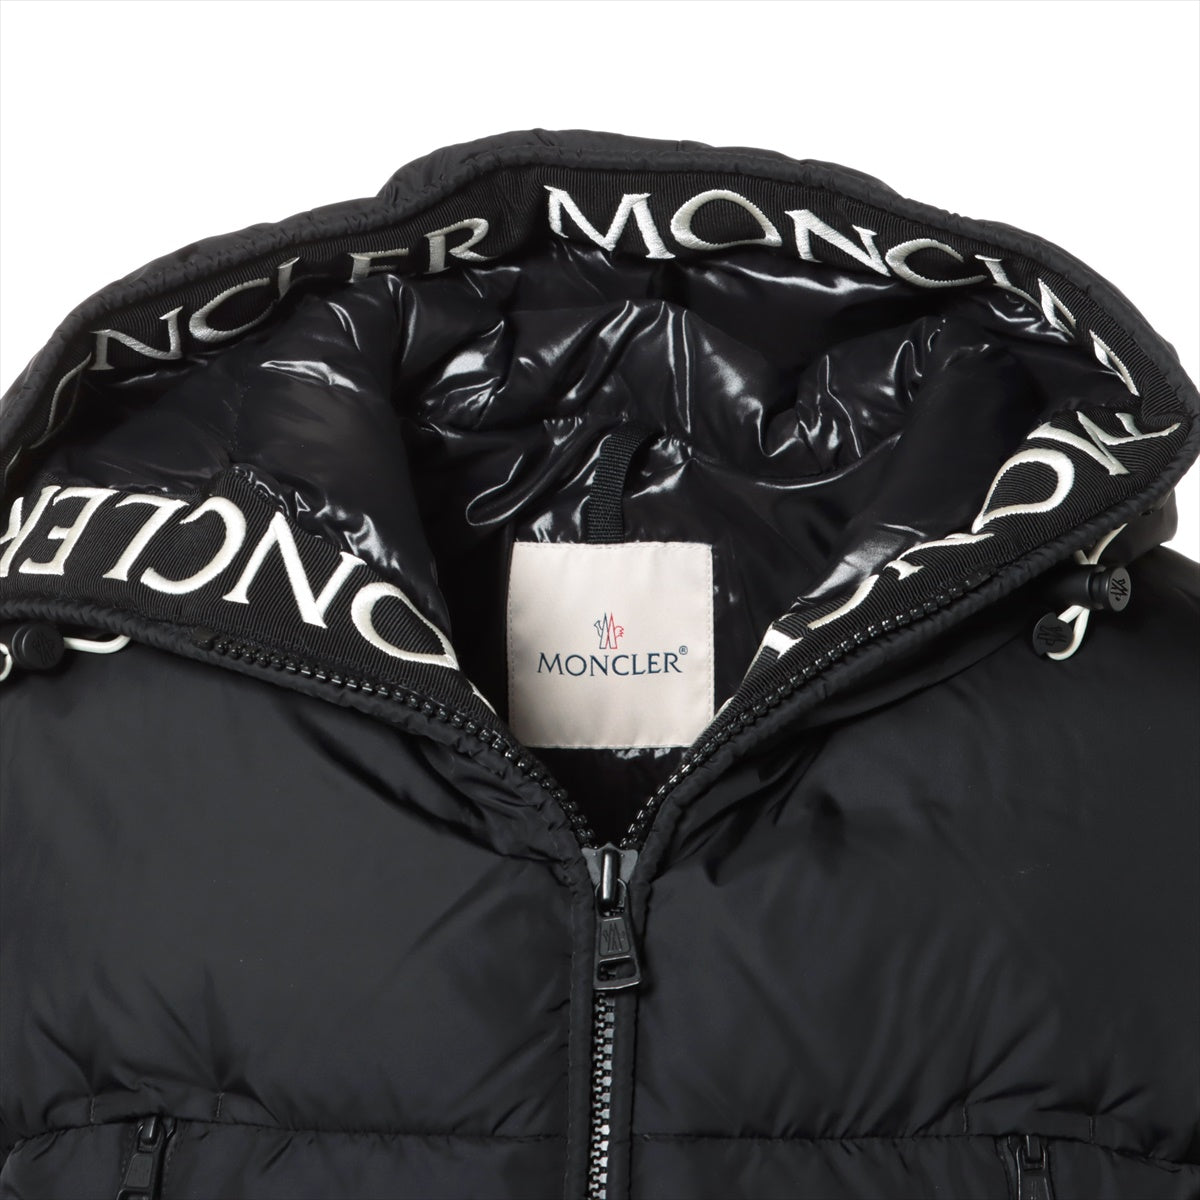 Moncler MONTCLA 20 years Nylon Down jacket 2 Men's Black